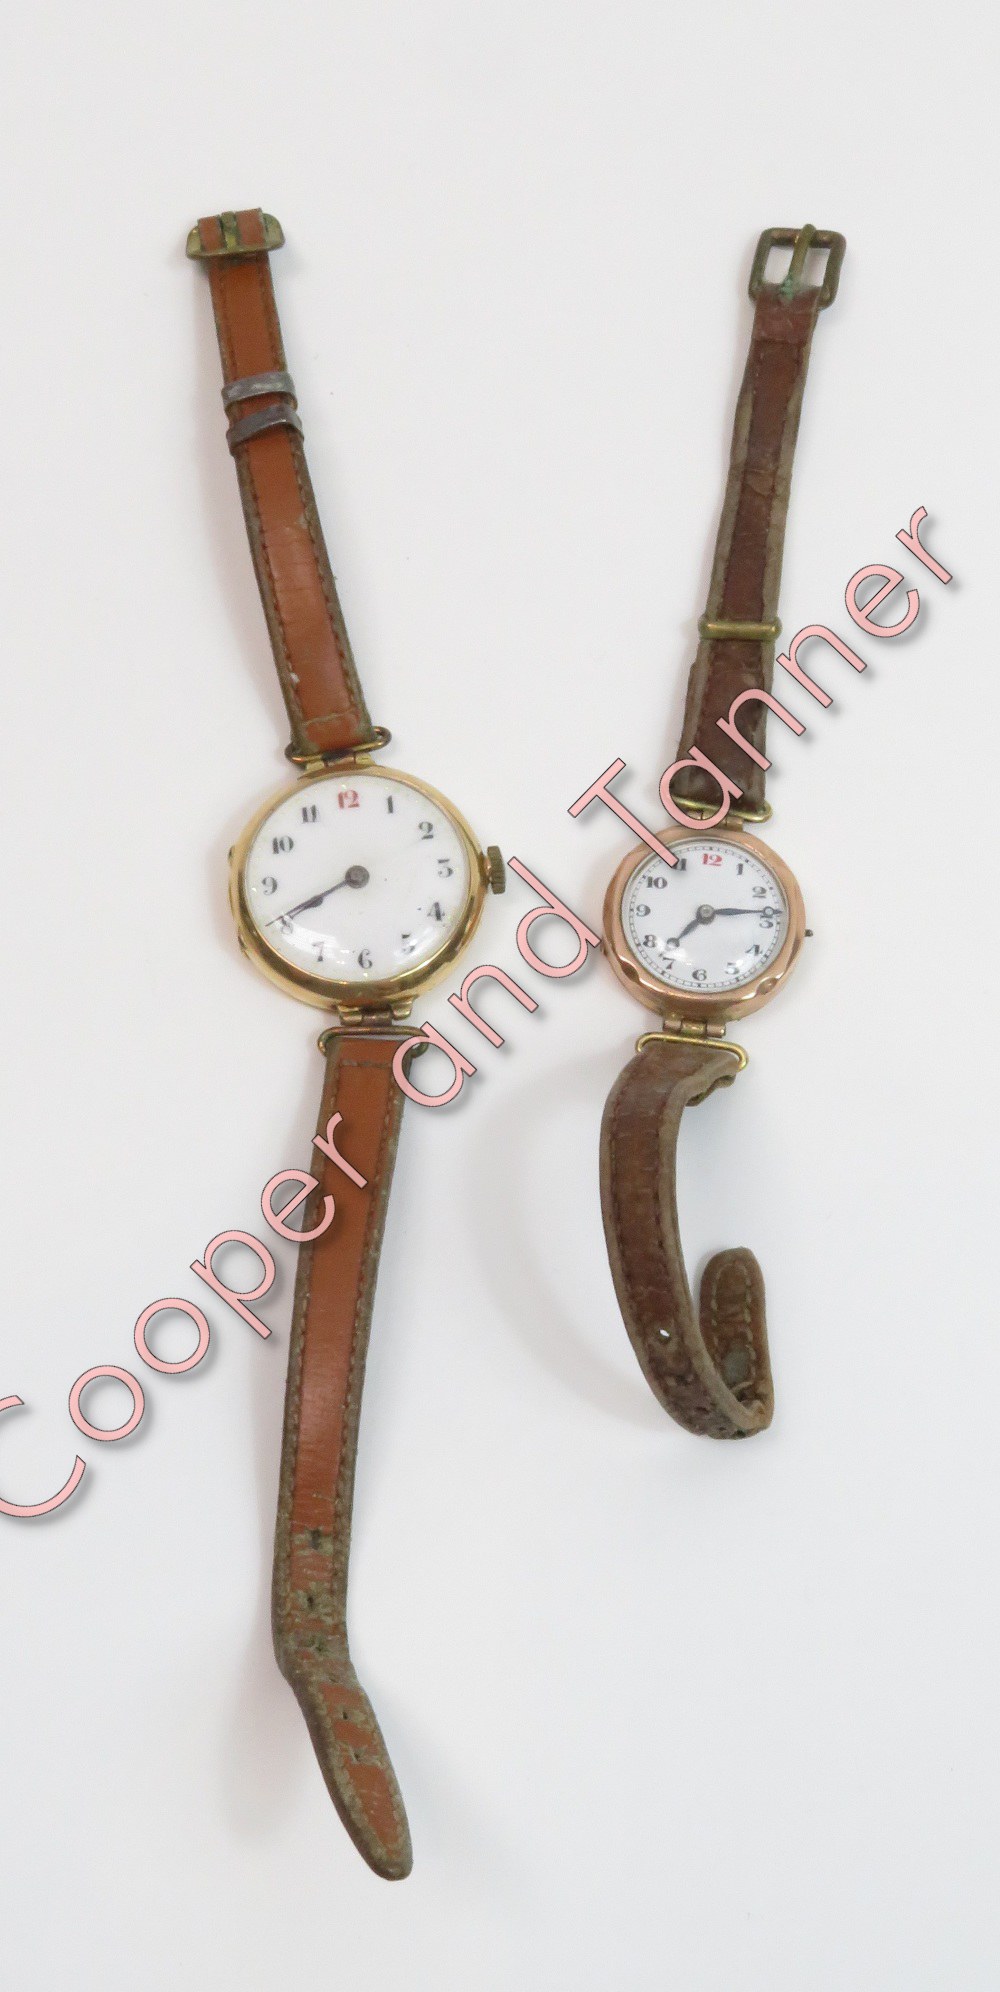 A 15 carat gold lady's mechanical wrist watch, on a strap; with a lady's 9 carat gold wrist watch on